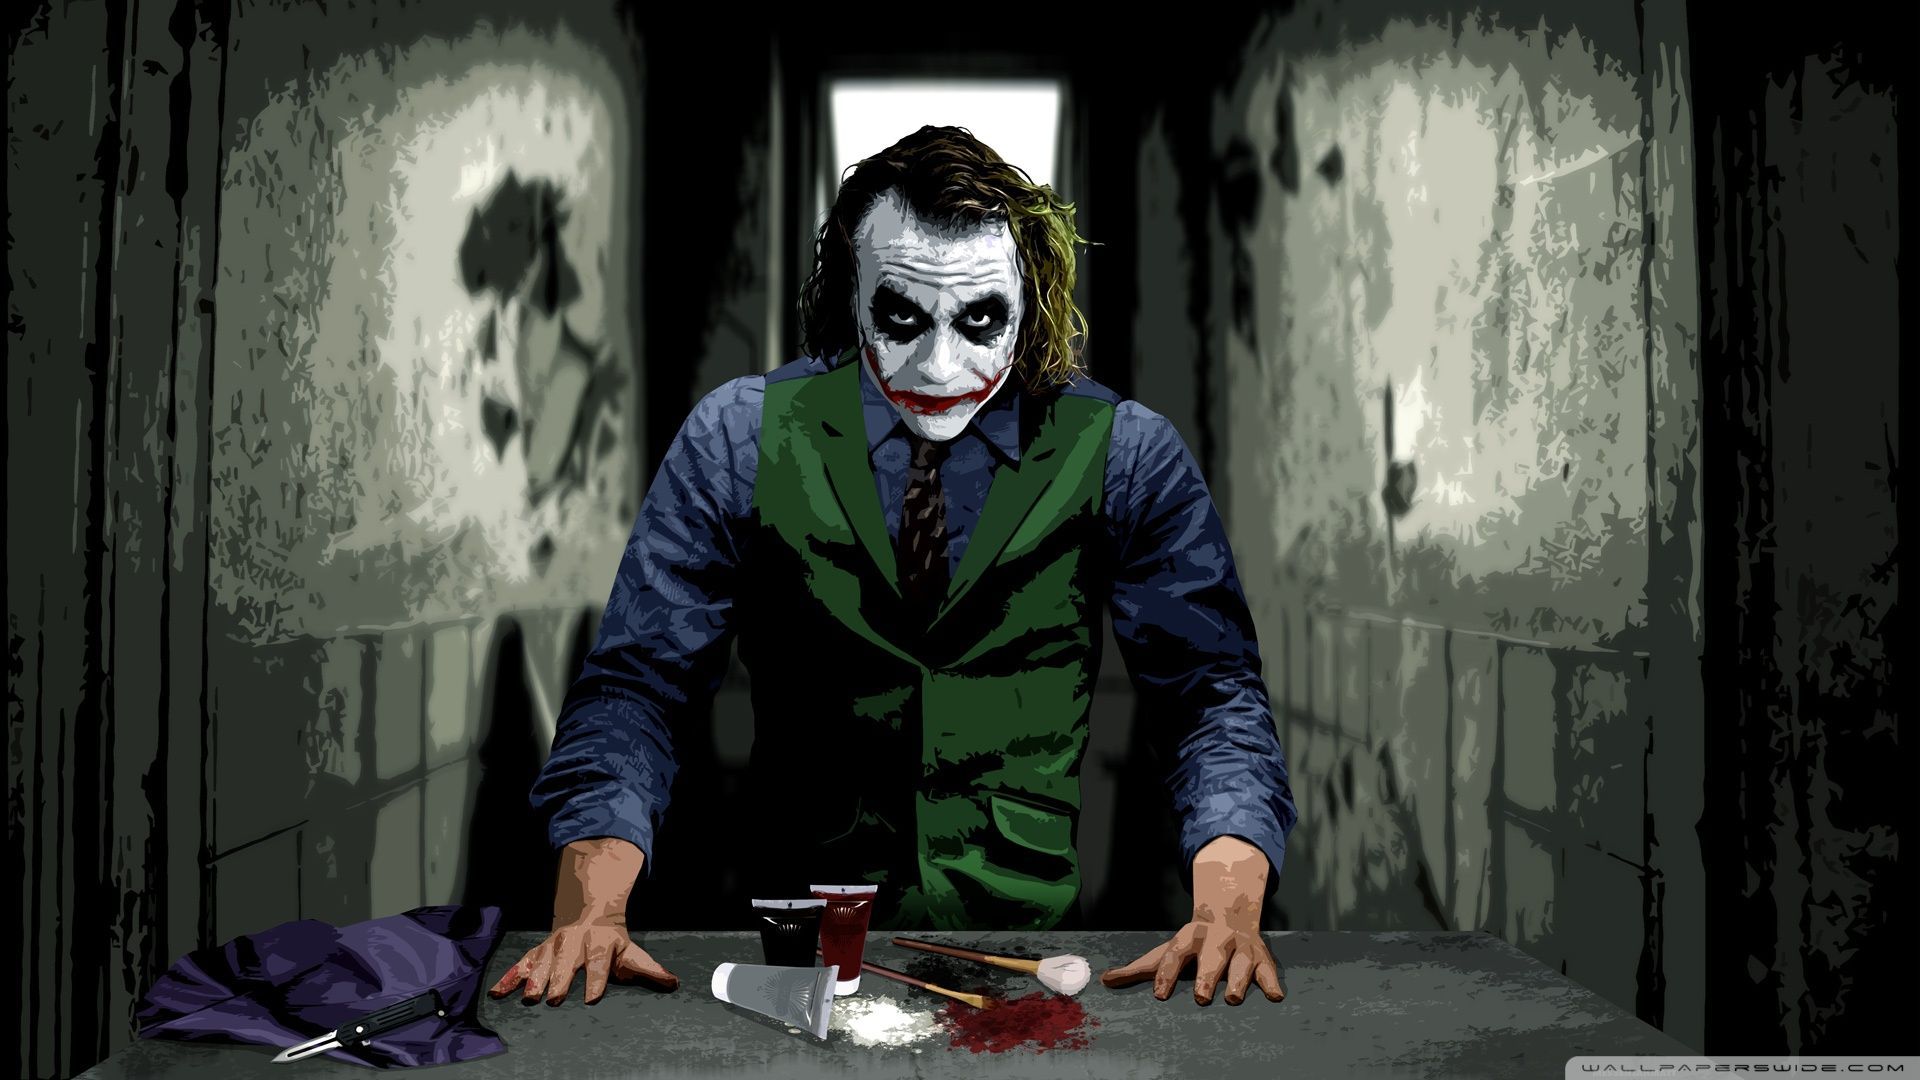 Heath Ledger The Joker HD Wallpaper 1920x1080 ID56152